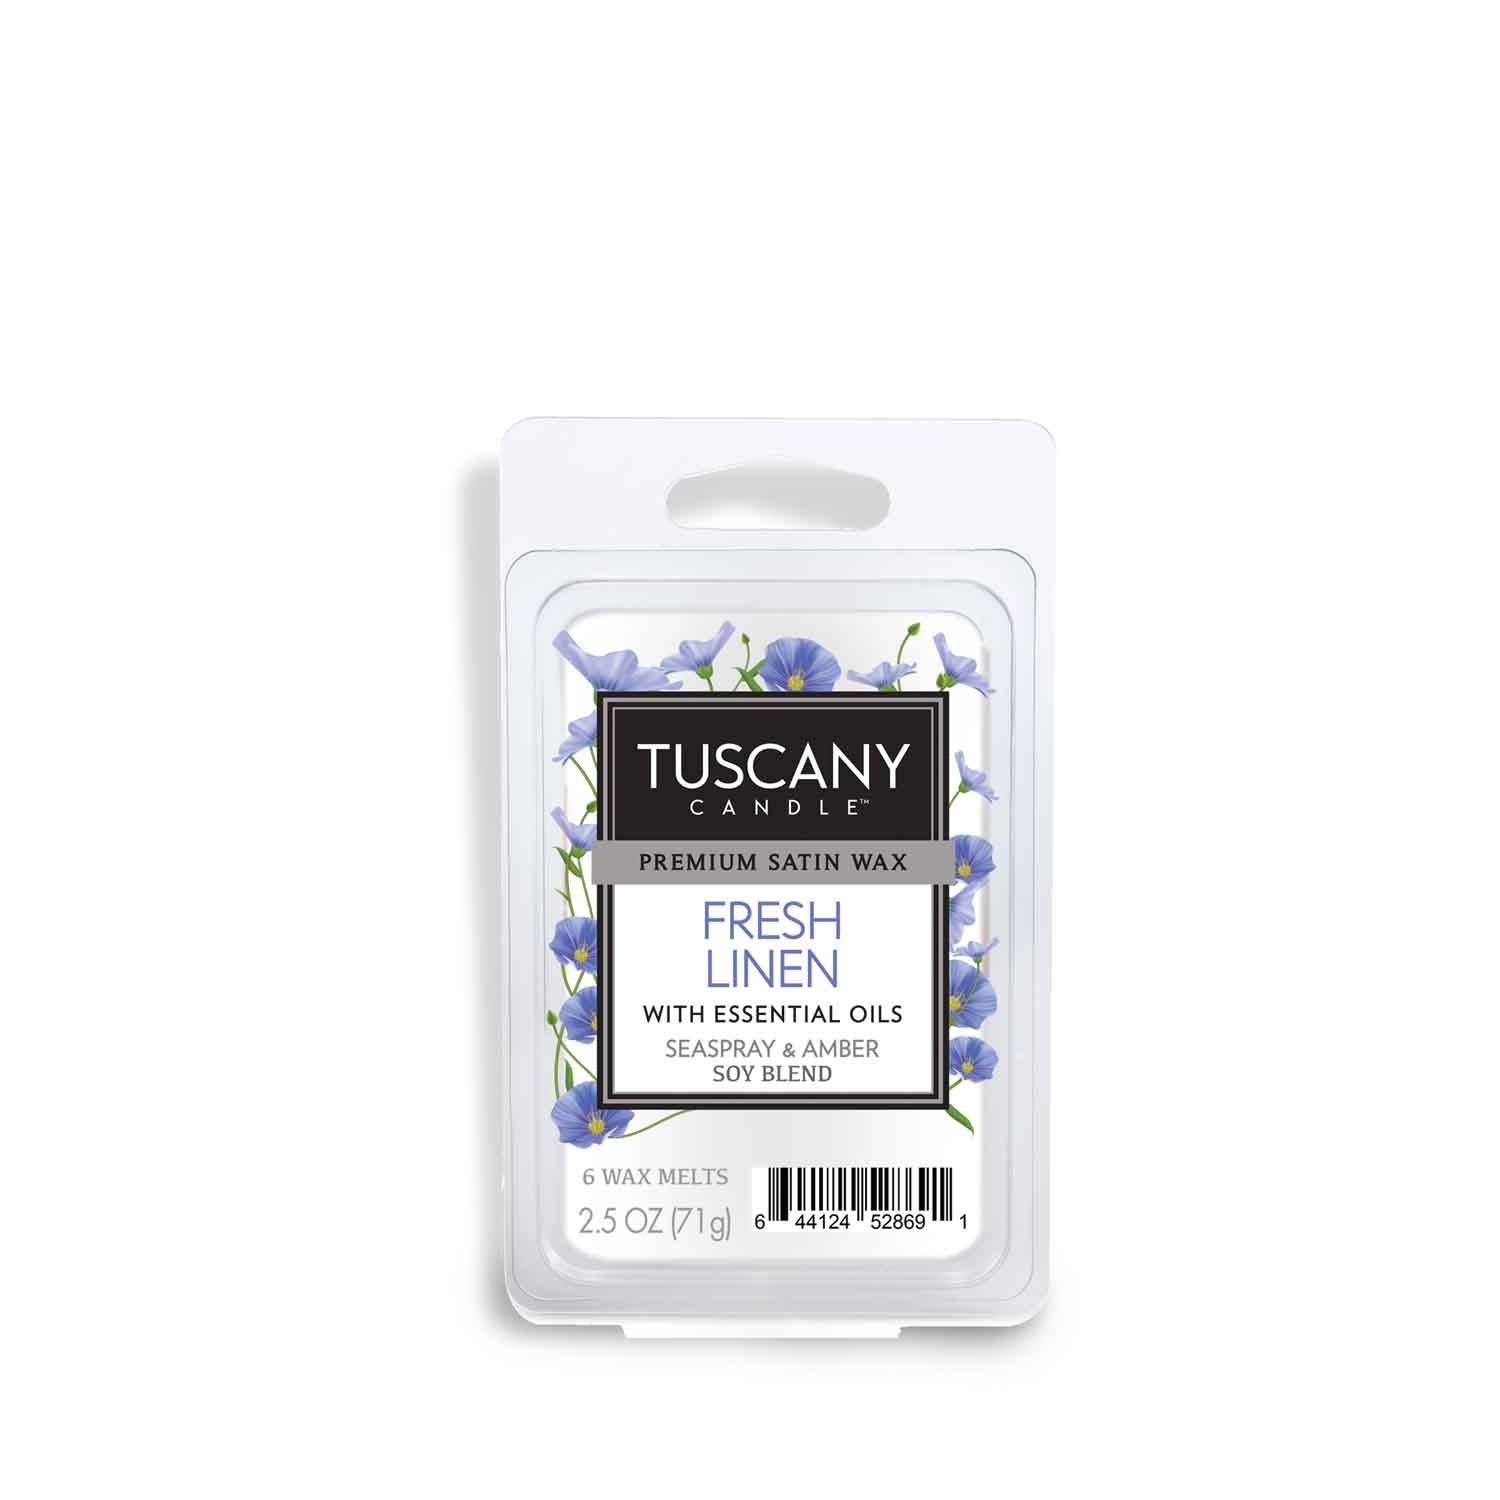 Tuscany Candle® Fresh Linen Scented Wax Melt (2.5 oz) Tart Bars